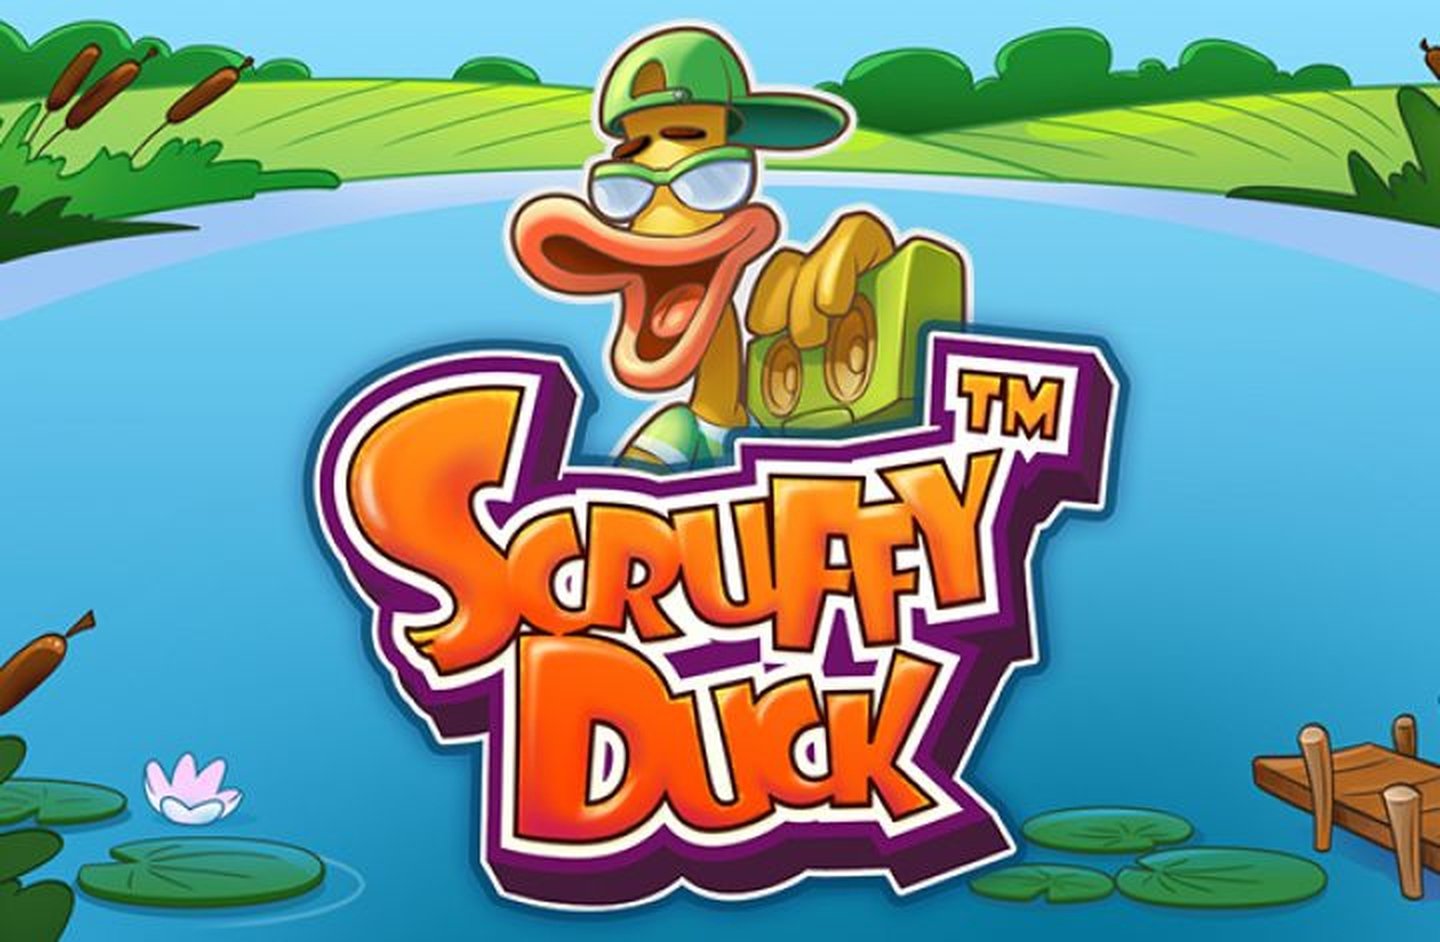 Scruffy Duck demo